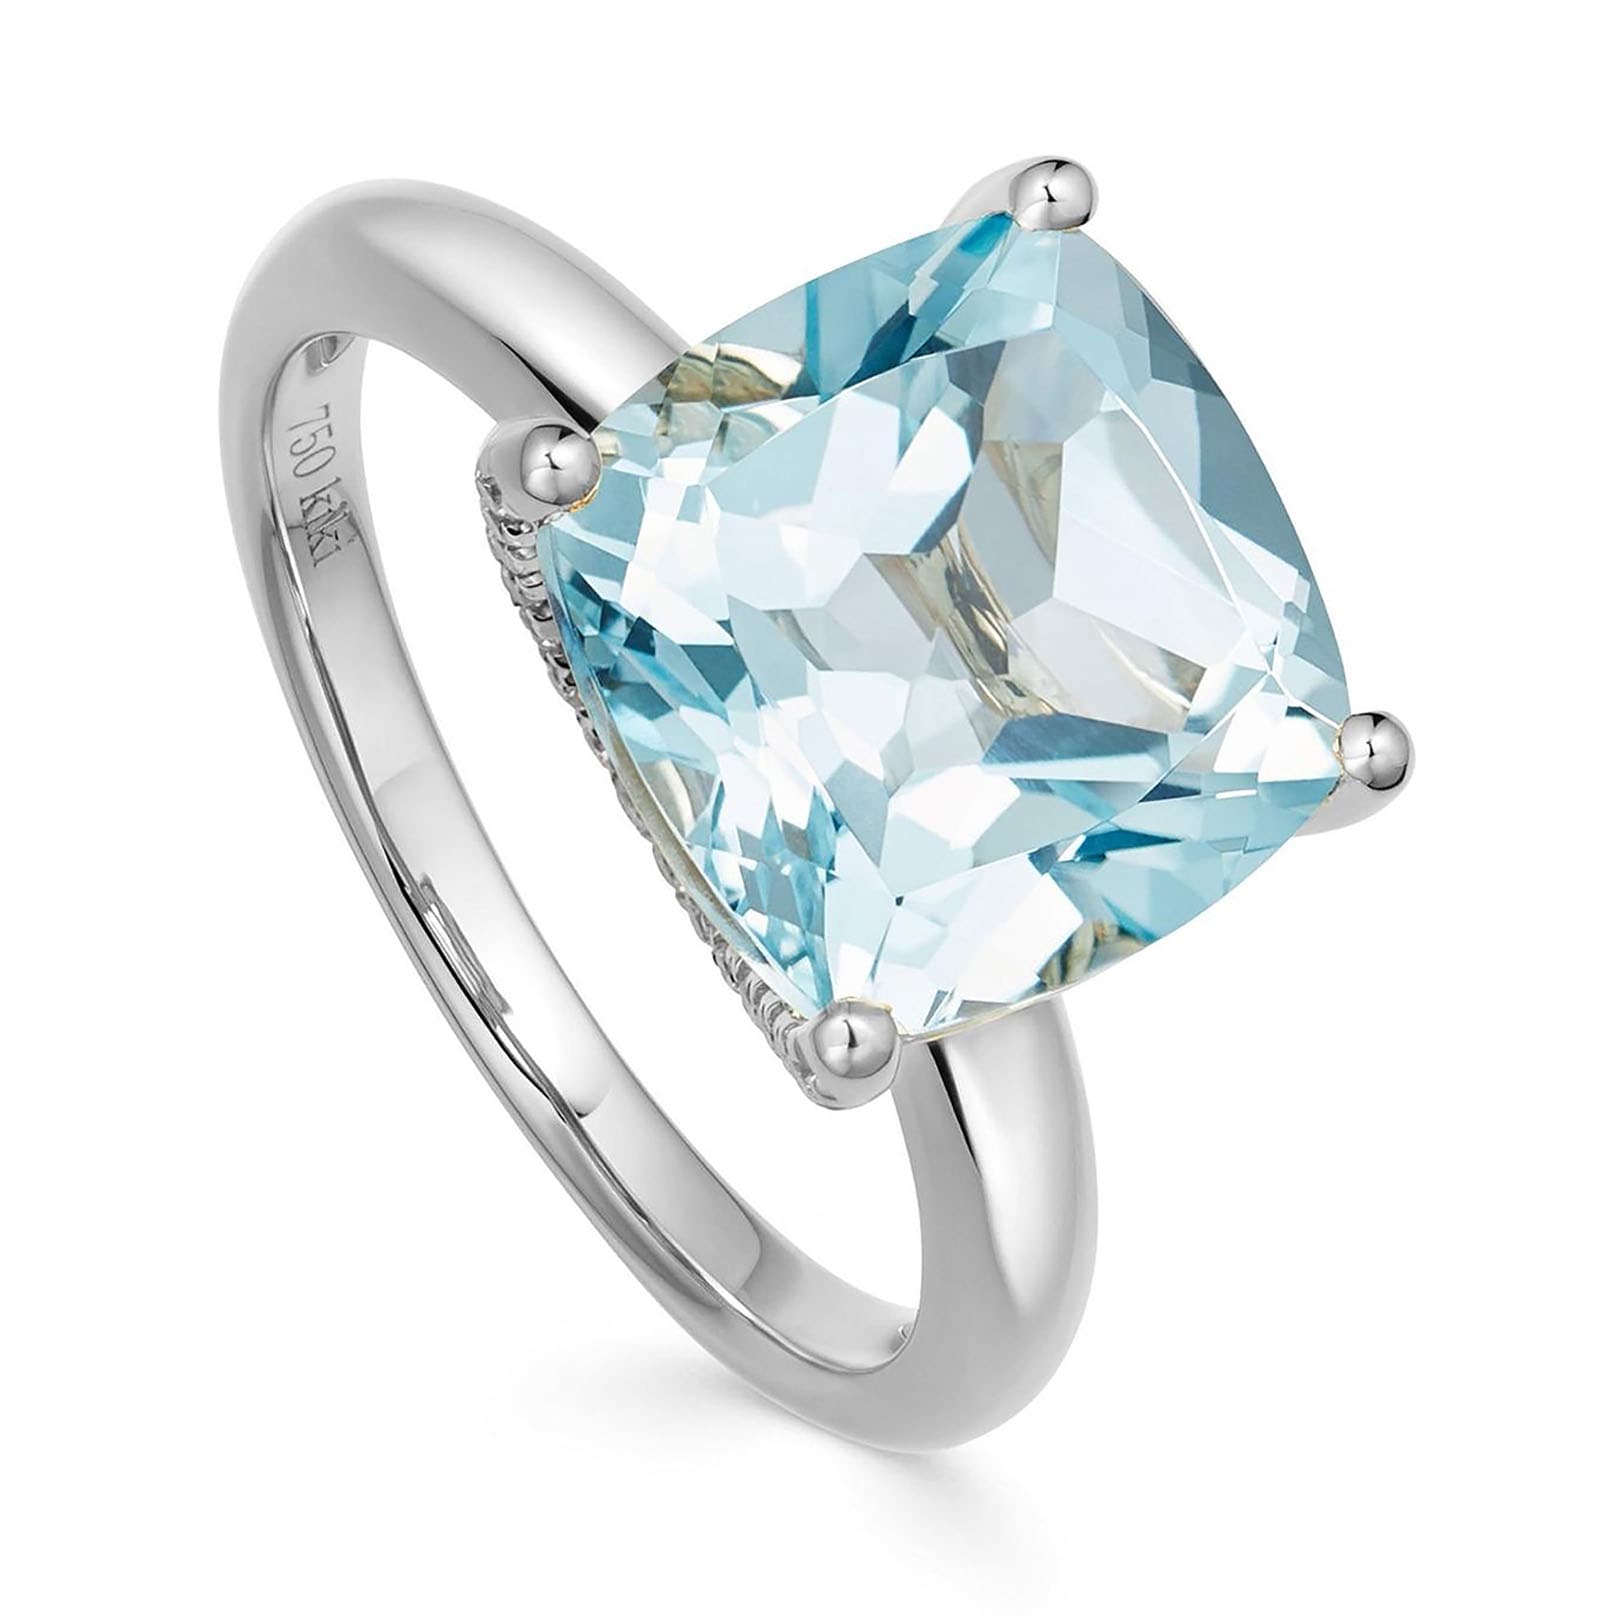 Kiki Cushion 18ct White Gold, Diamond Claw & Blue Topaz Ring - Ring Size M